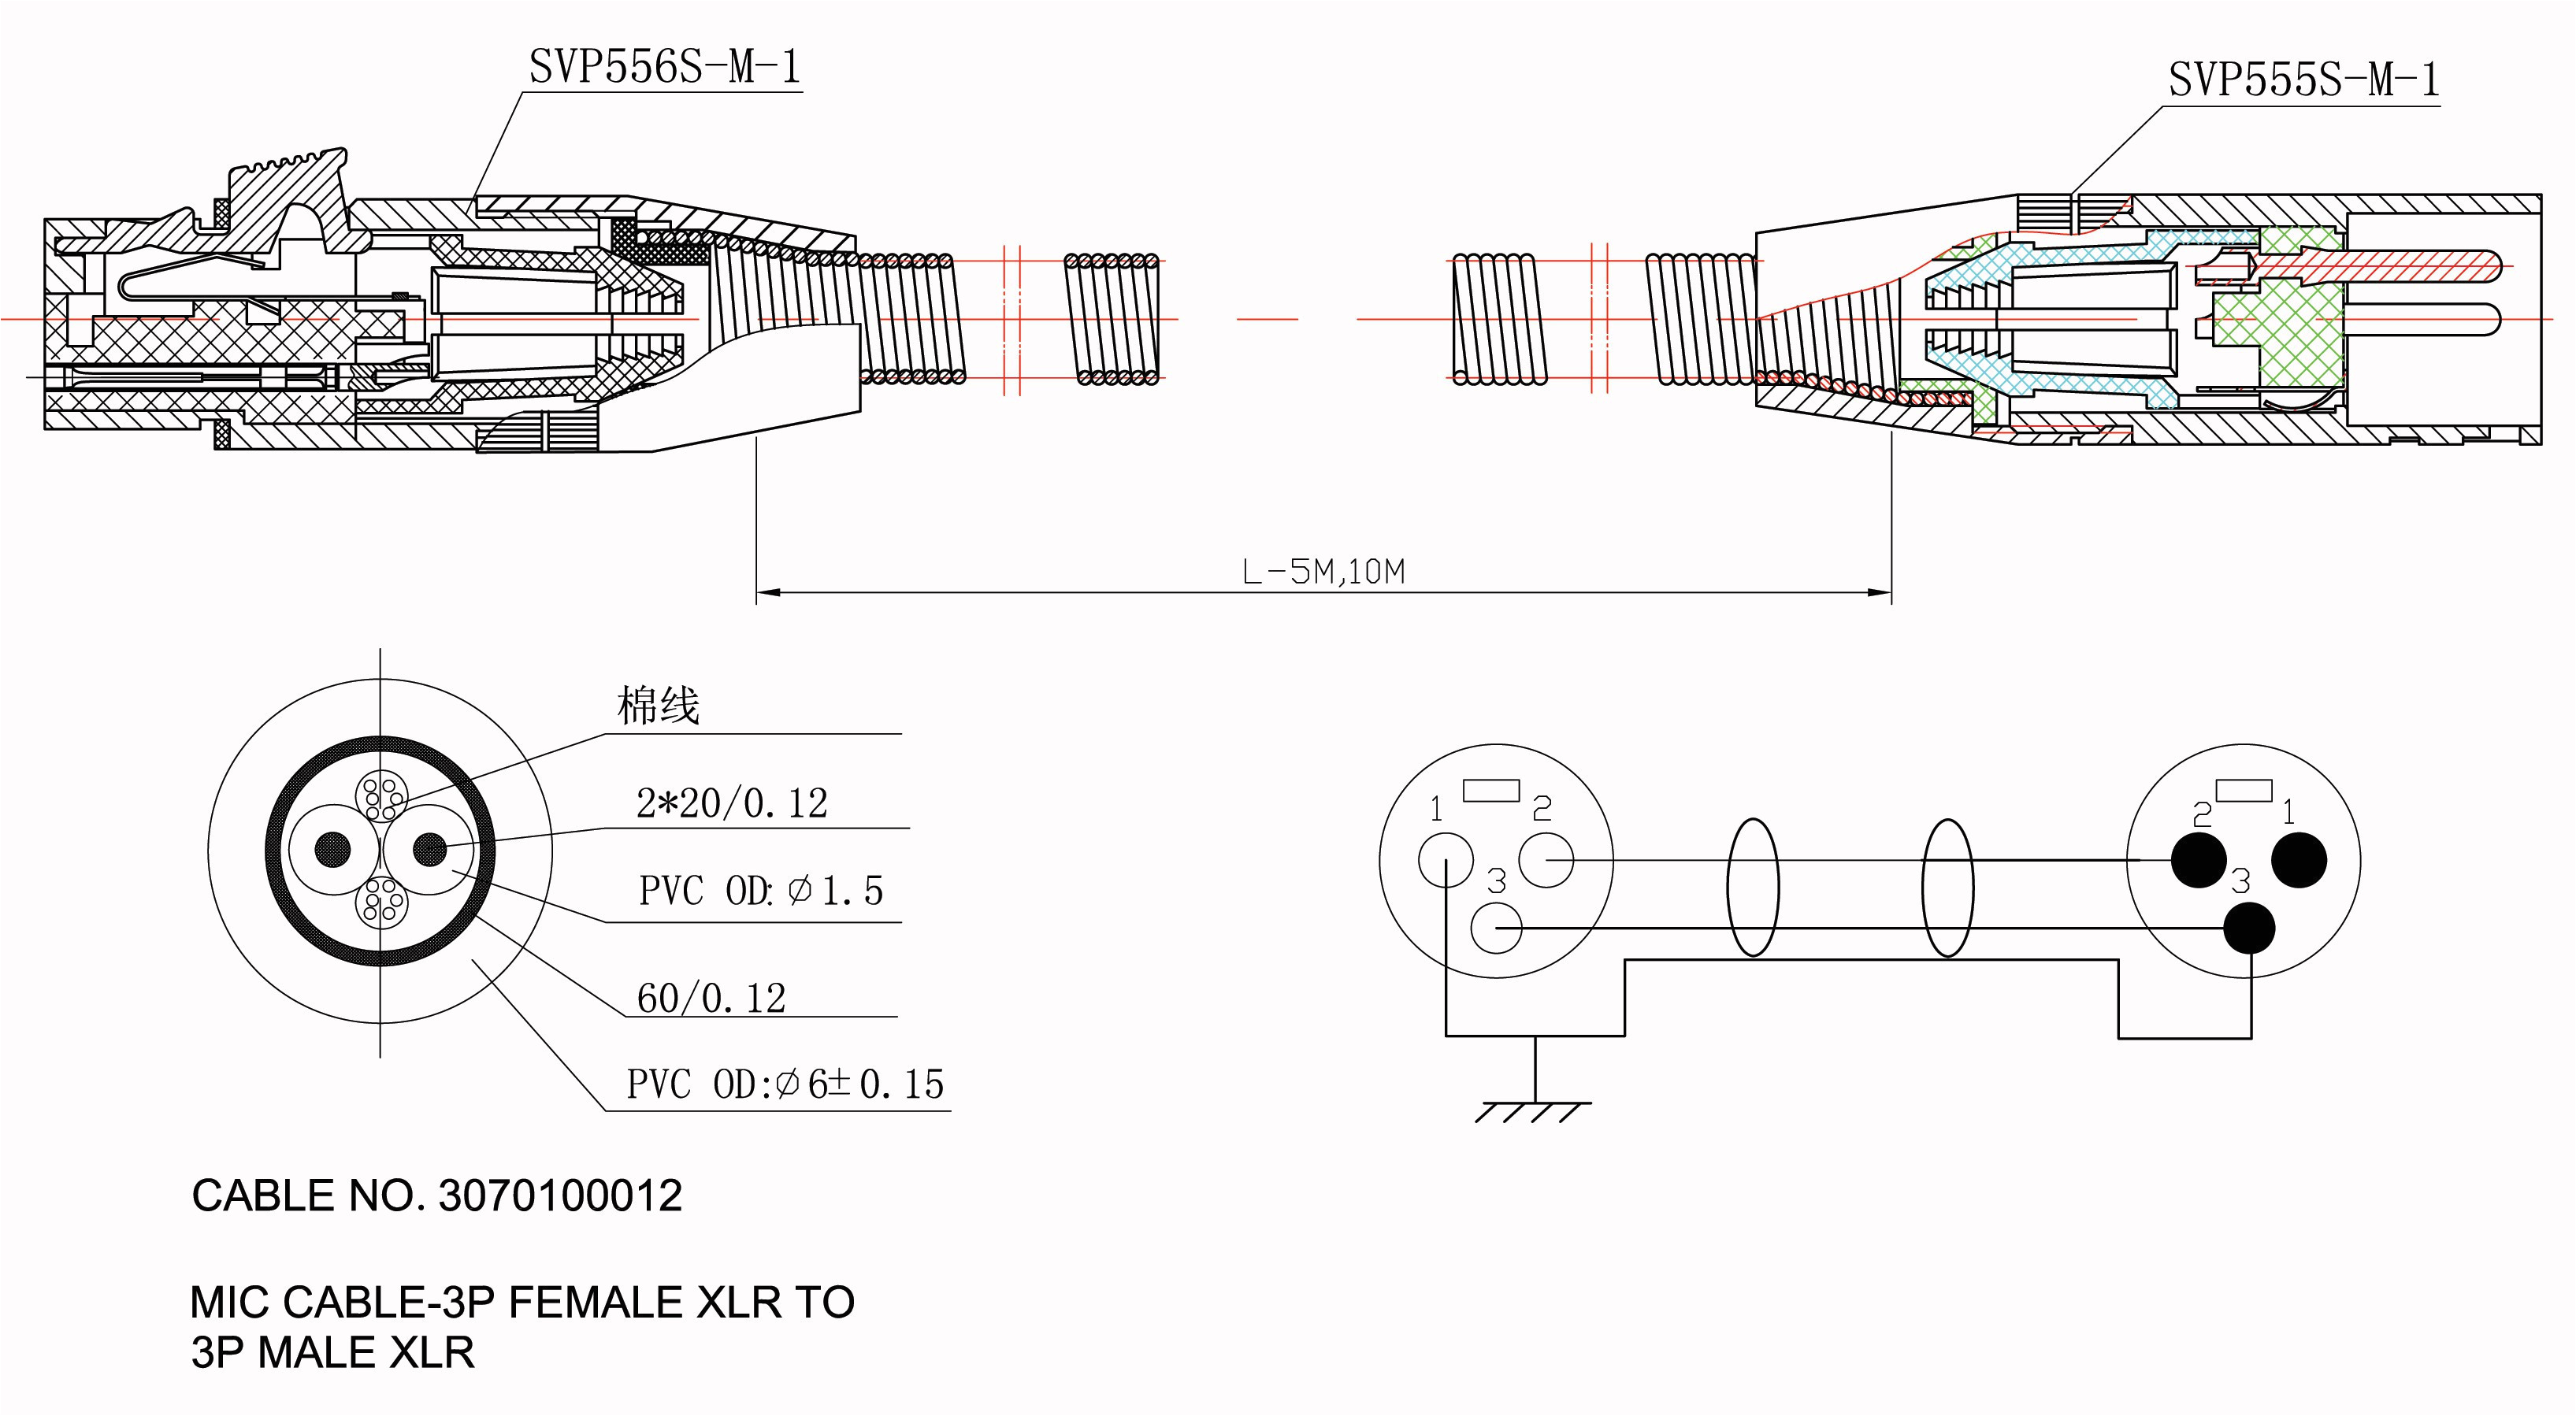 dsc 551 wiring diagram electrical schematic wiring diagram chevy traverse cargo net chevy circuit diagrams